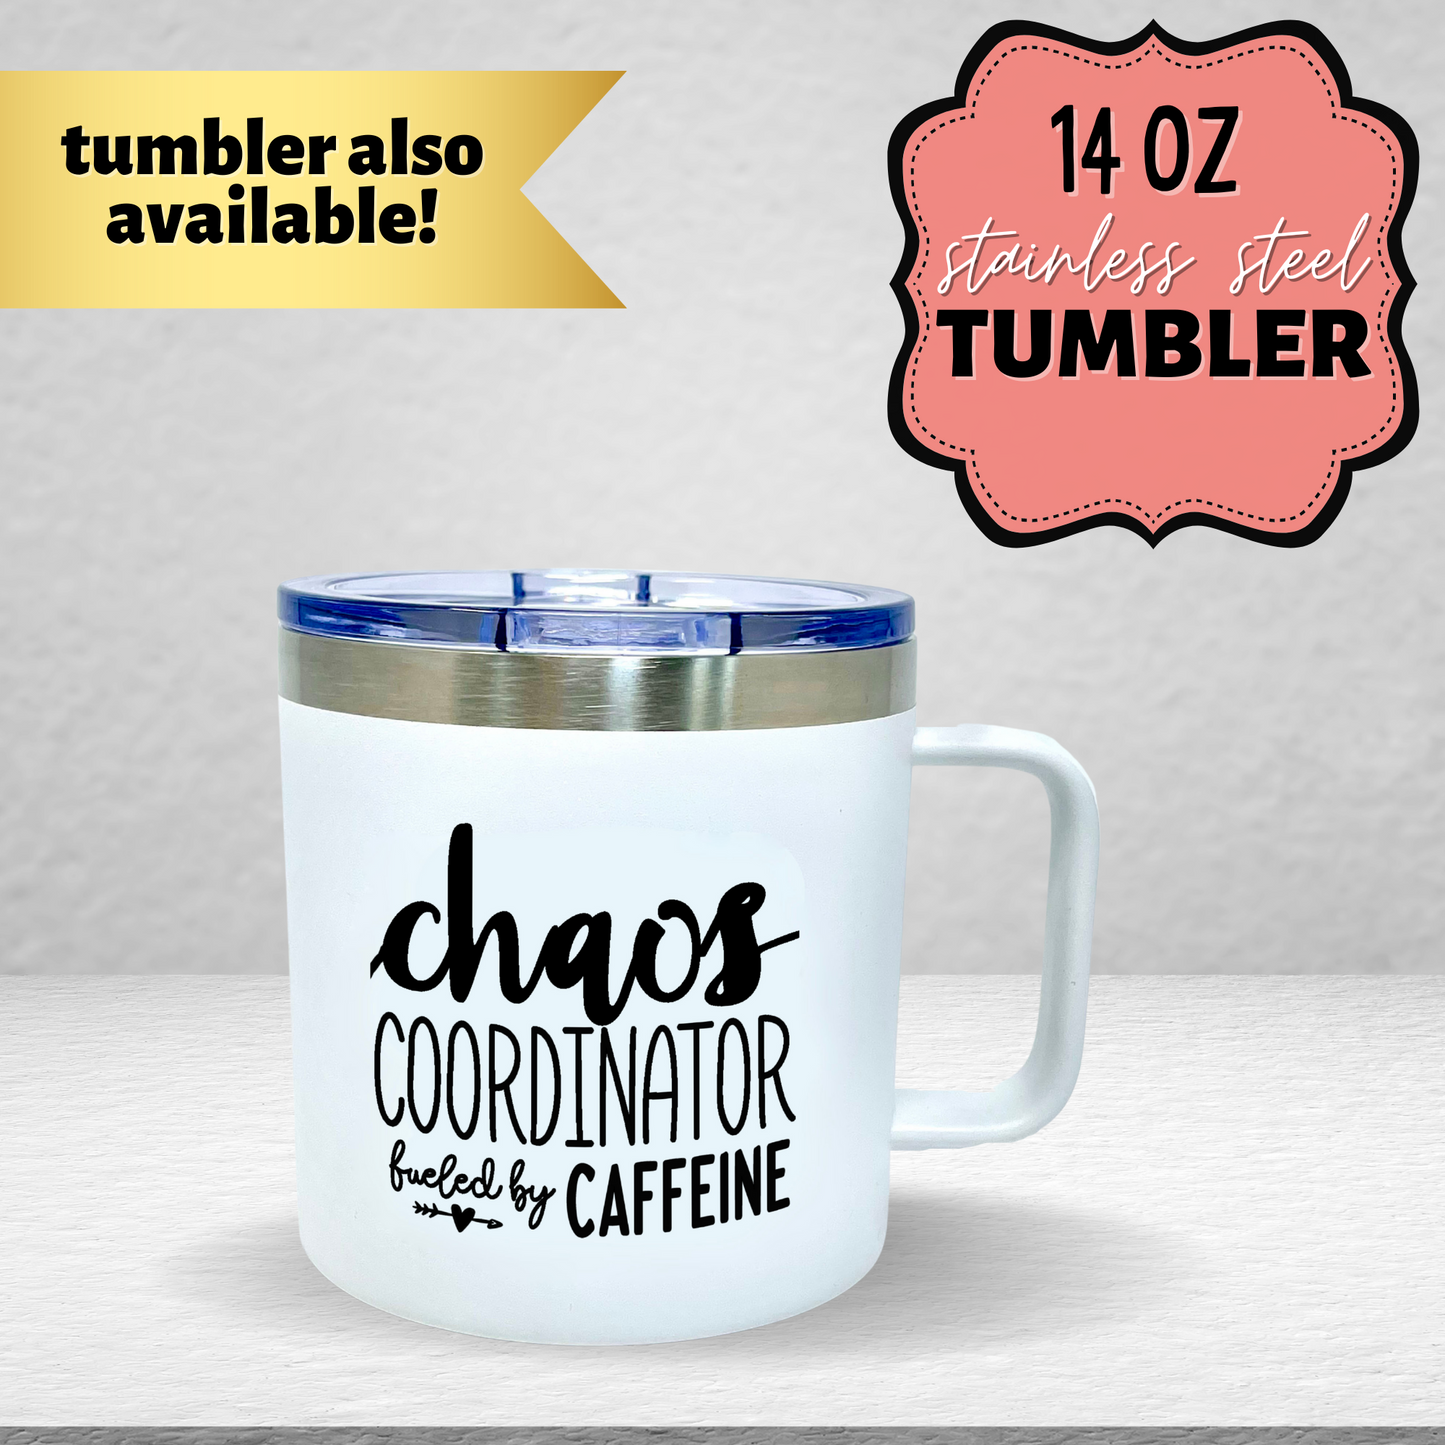 Chaos Coordinator 15 oz  Coral Ceramic Mug for Bosses